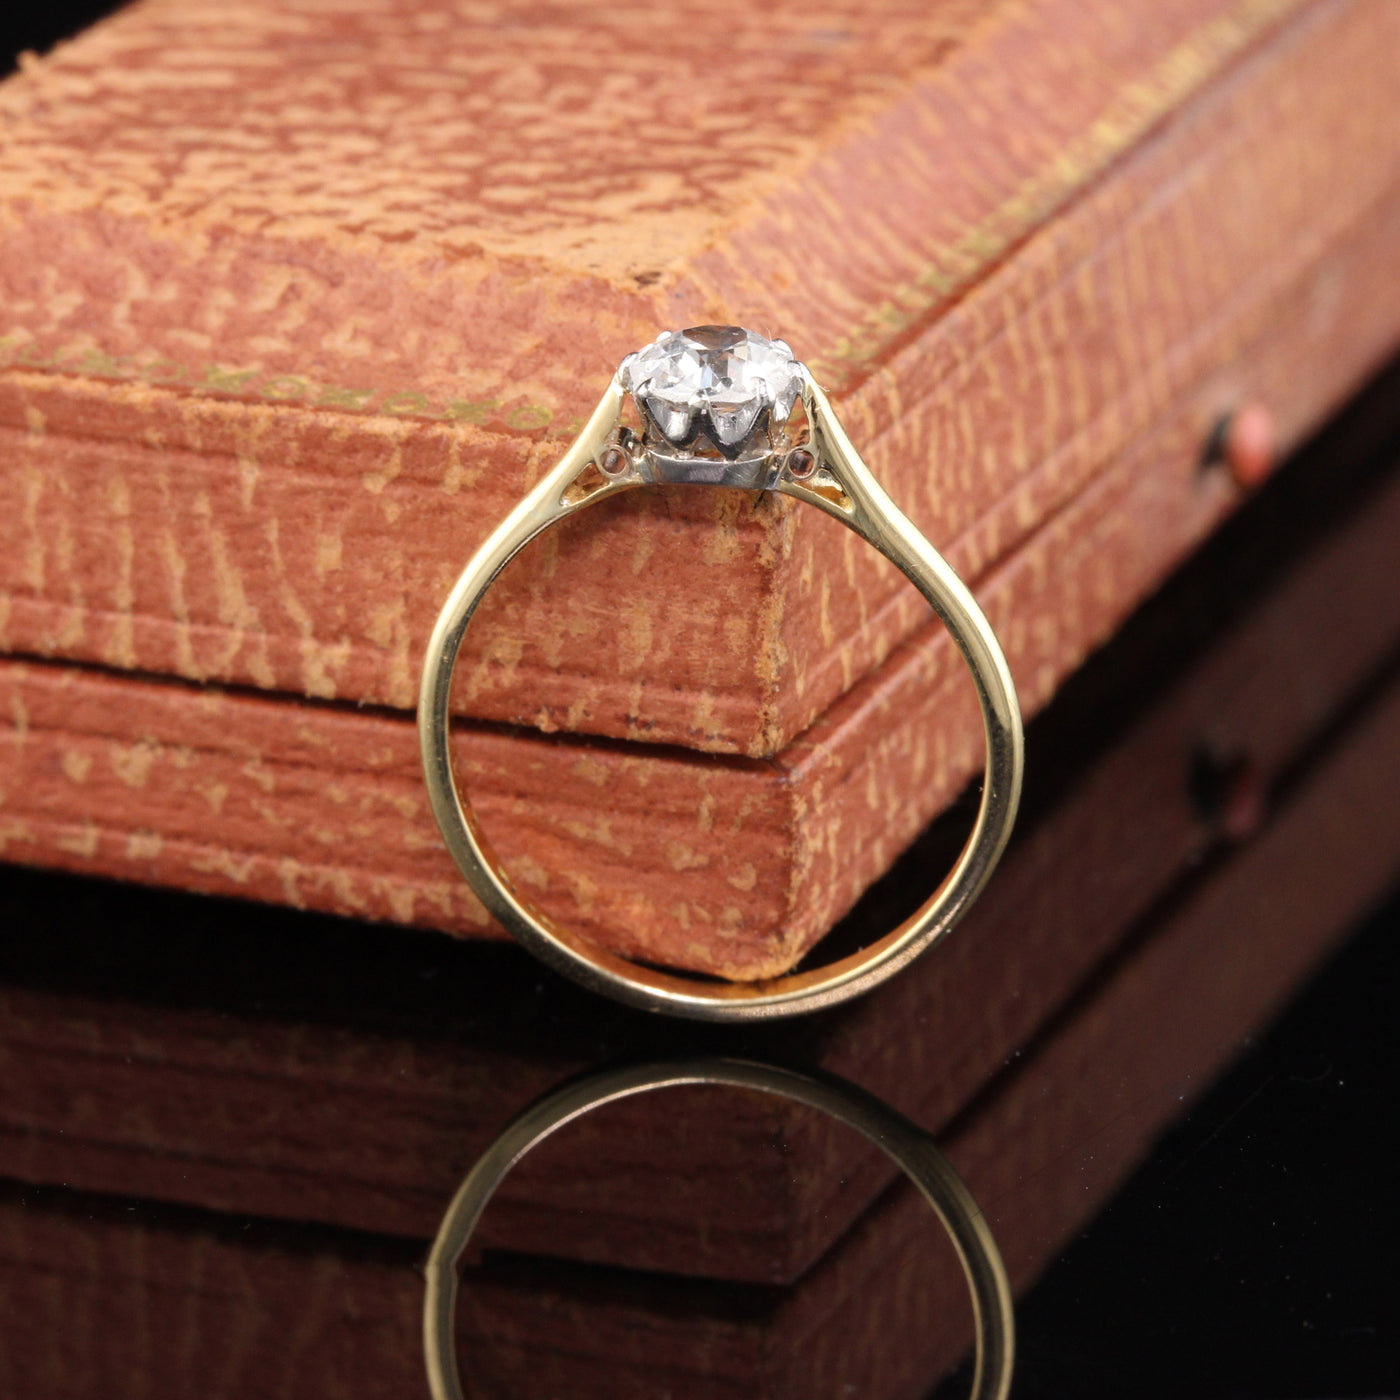 Antique Edwardian Yellow Gold Platinum Diamond Engagement Ring